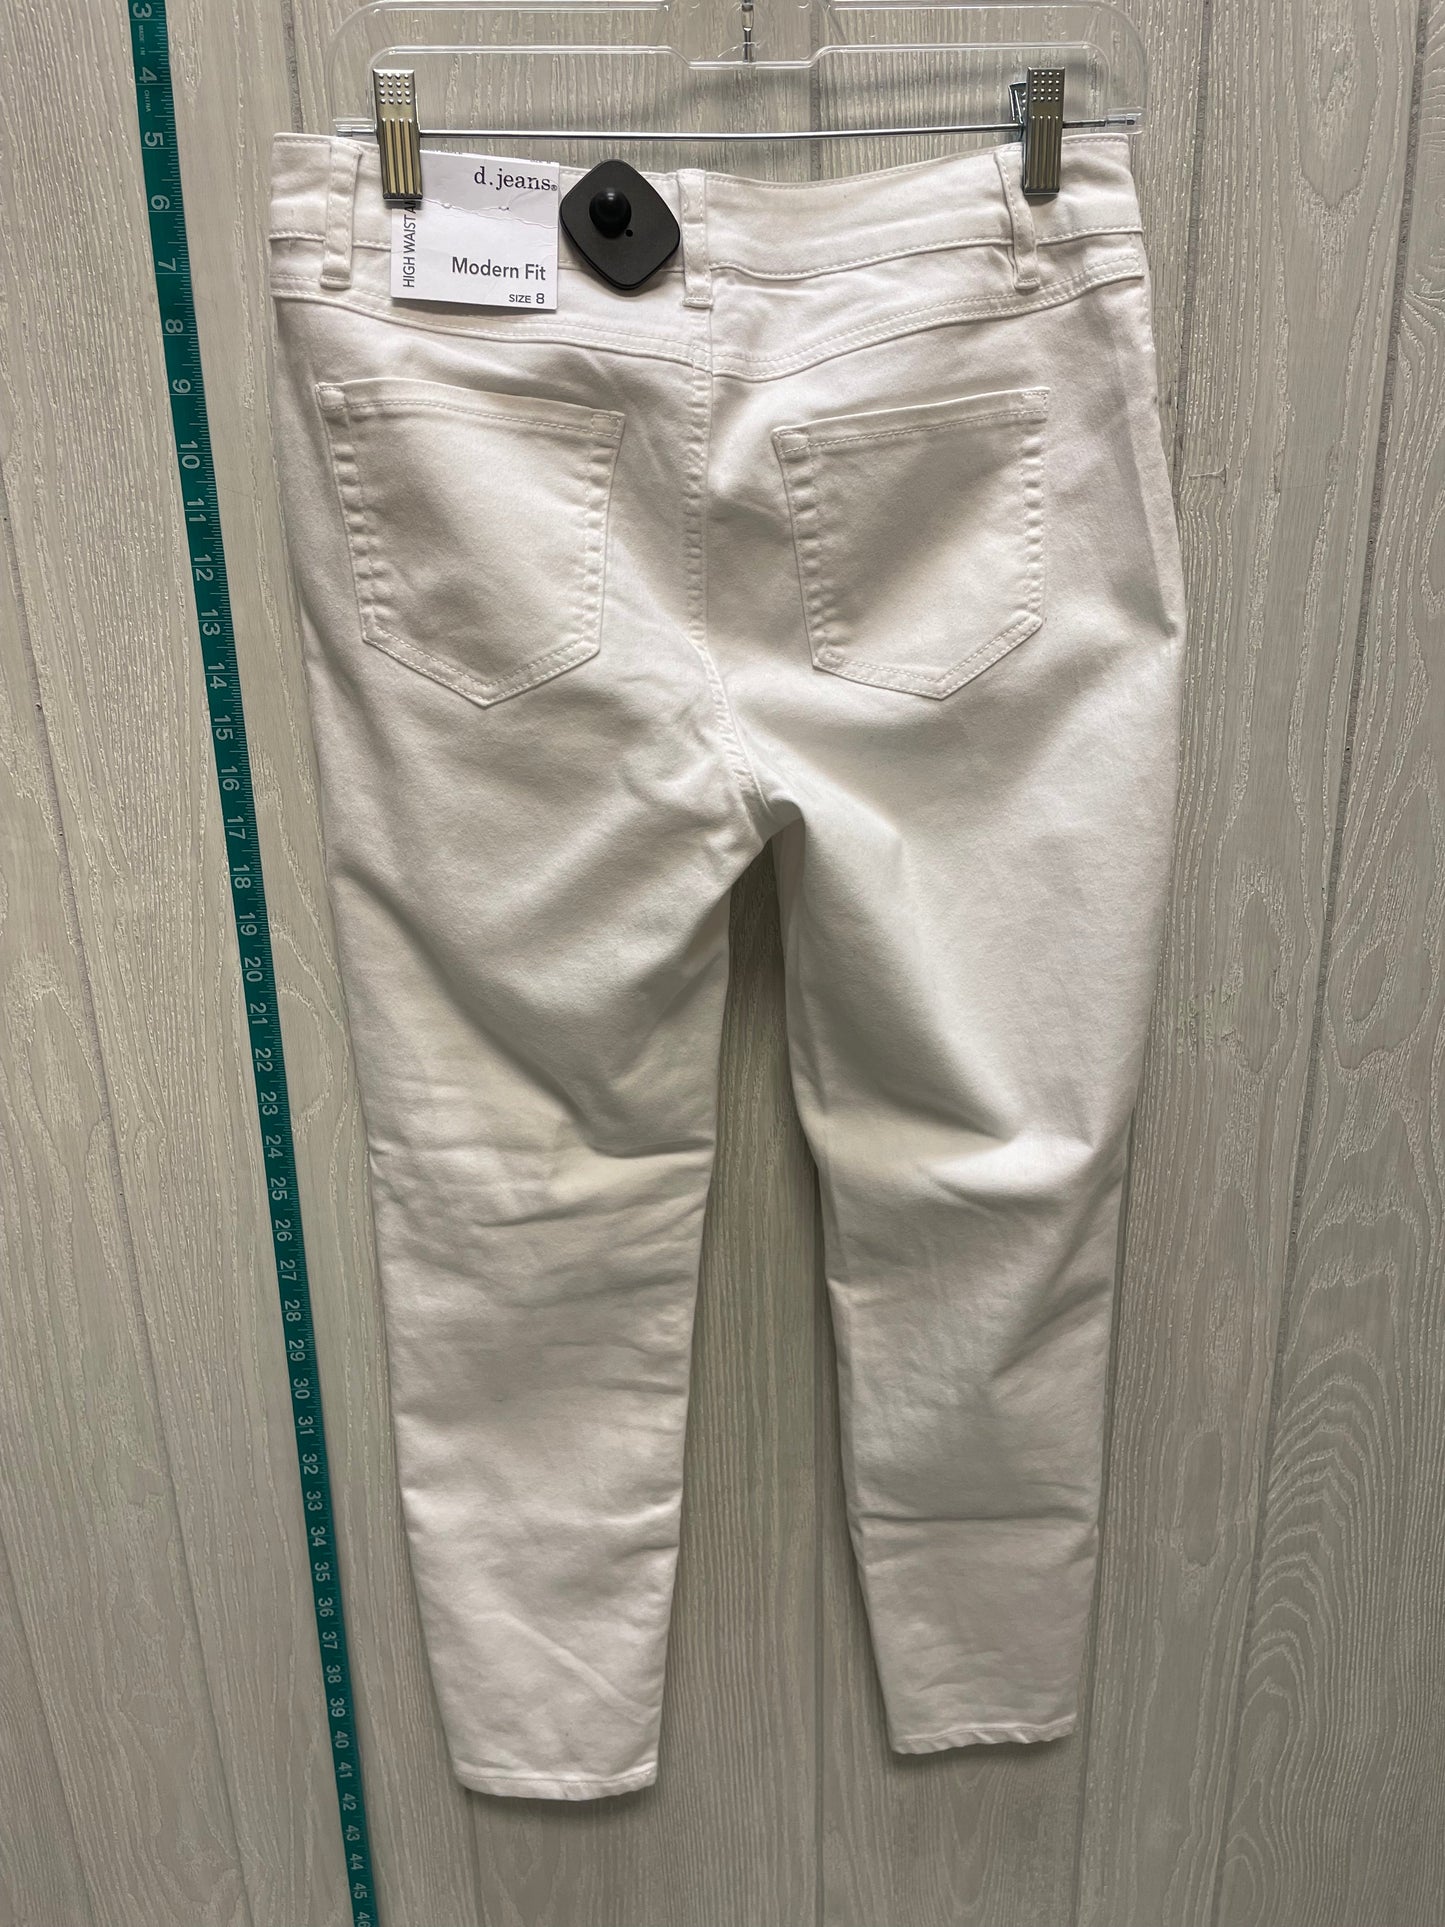 White Denim Jeans Skinny D Jeans, Size 8